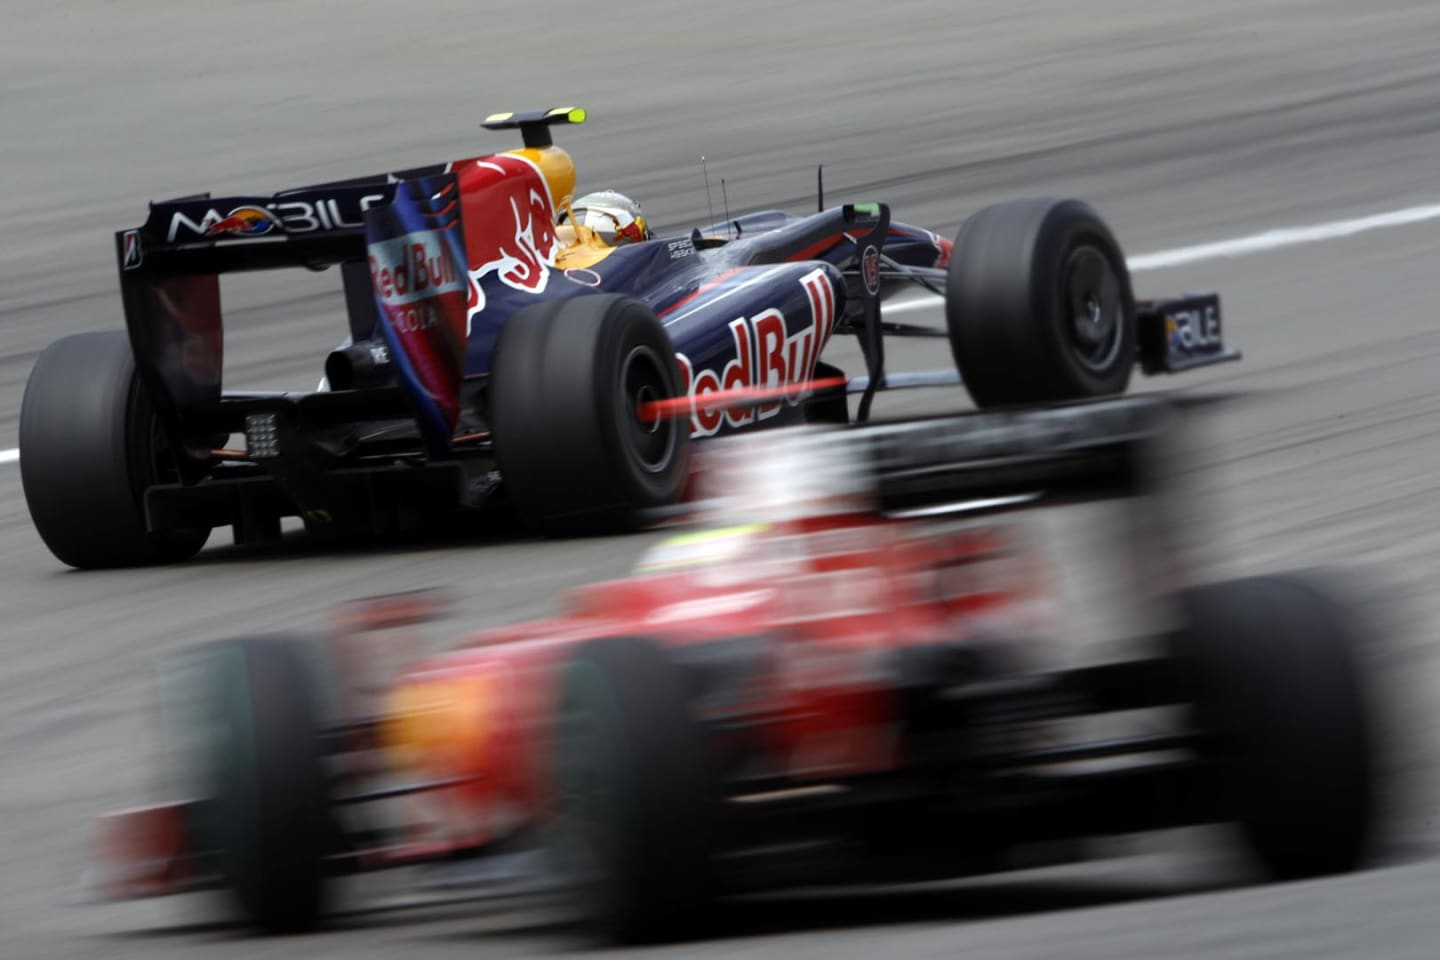 Nurburgring, Germany
12th July 2009
Sebastian Vettel, Red Bull Racing RB5 Renault, 2nd position,